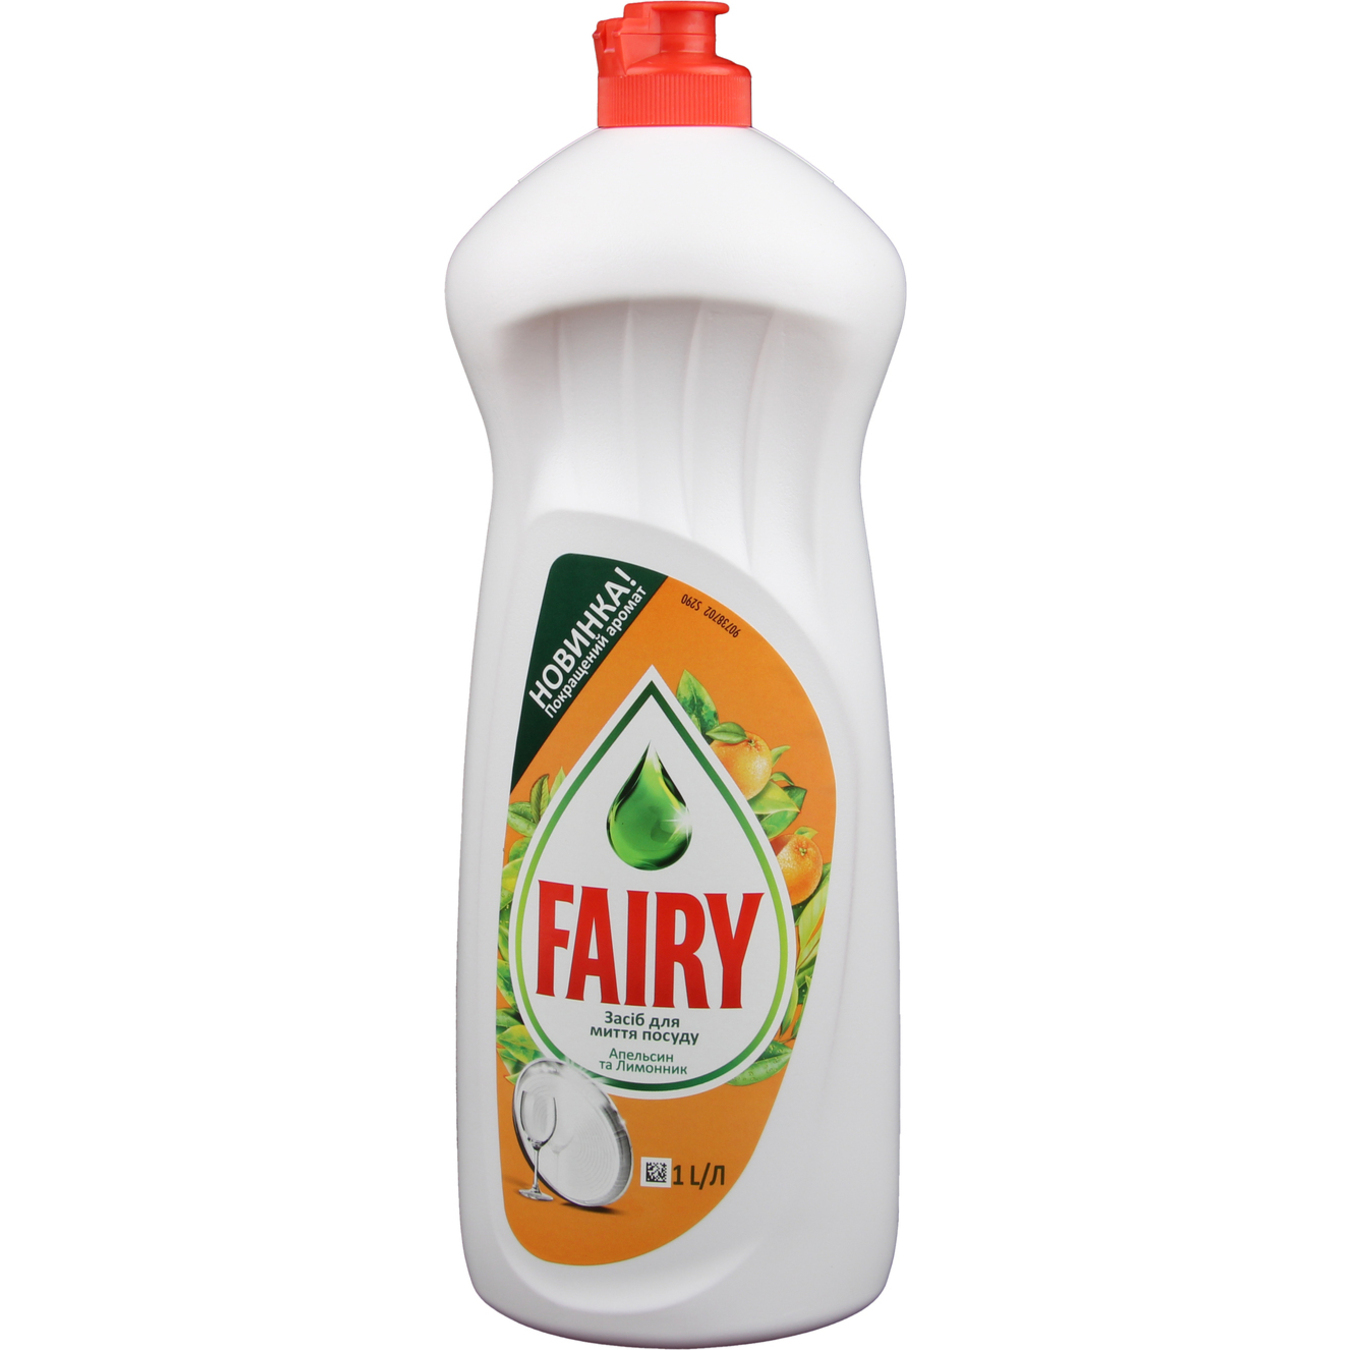 Fairy Orange And Lemongrass Dishwashing Liquid Detergent 1l 3